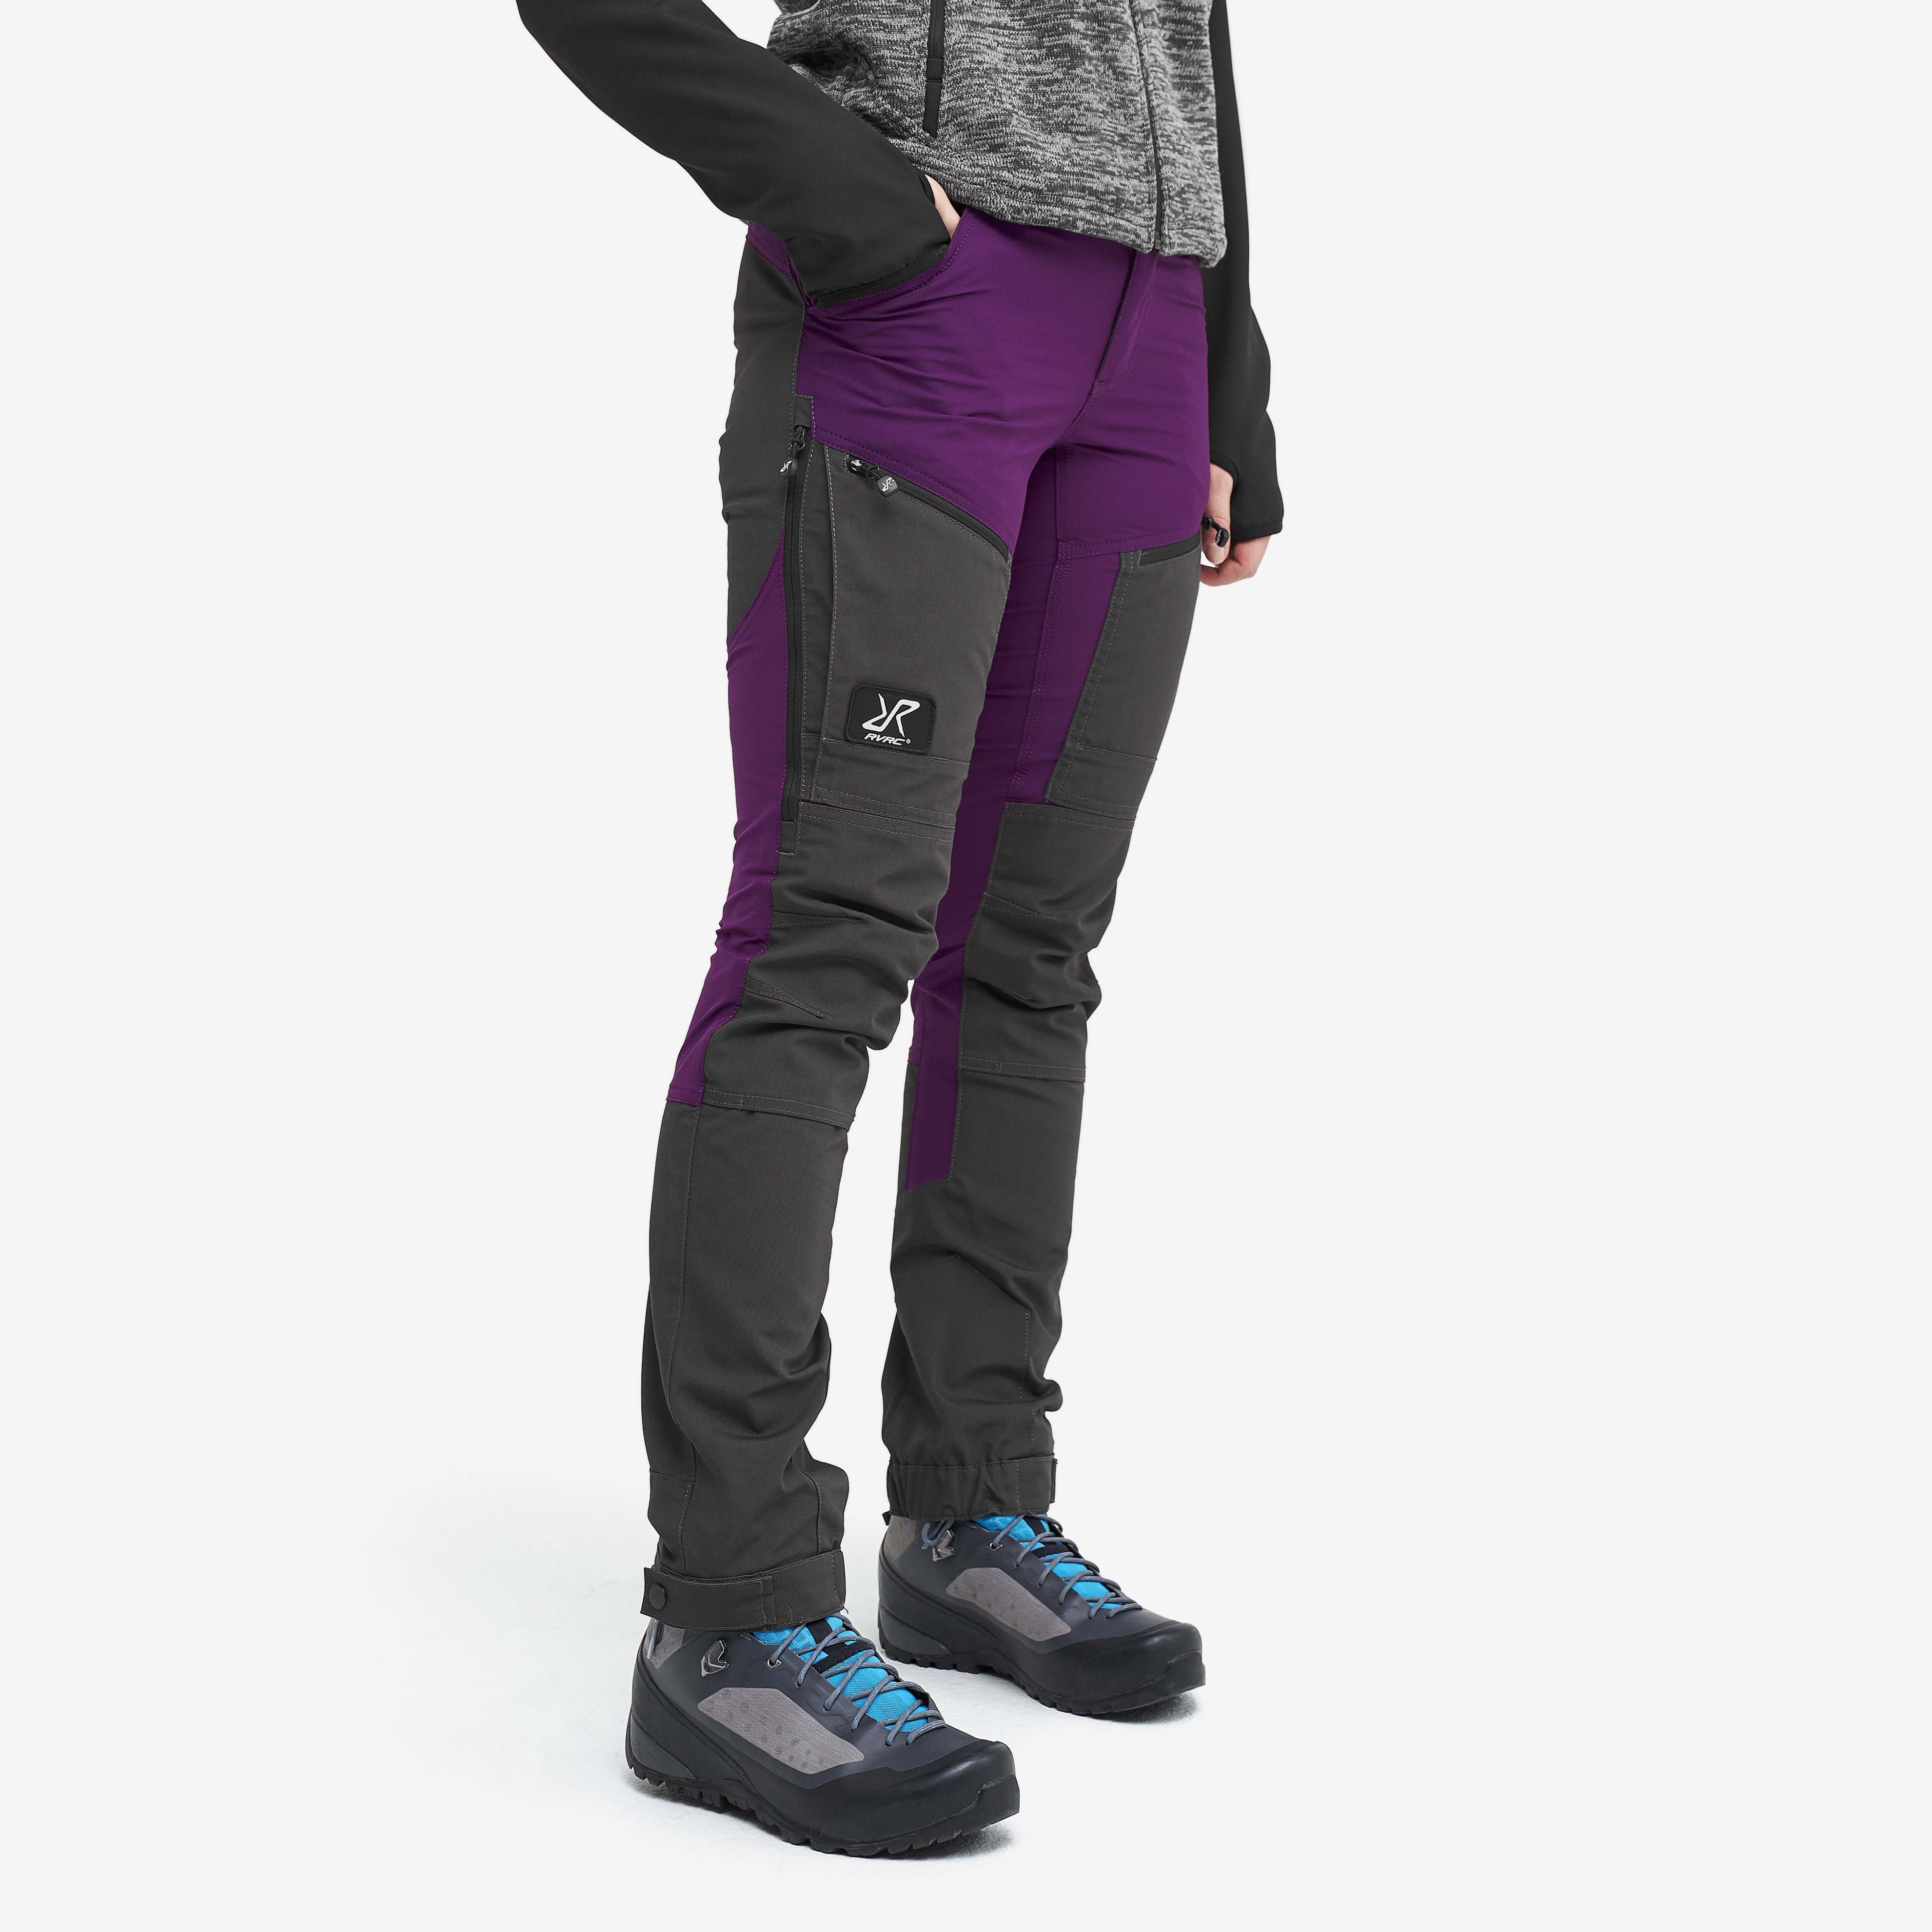 RVRC GP Pro hiking pants for women in purple